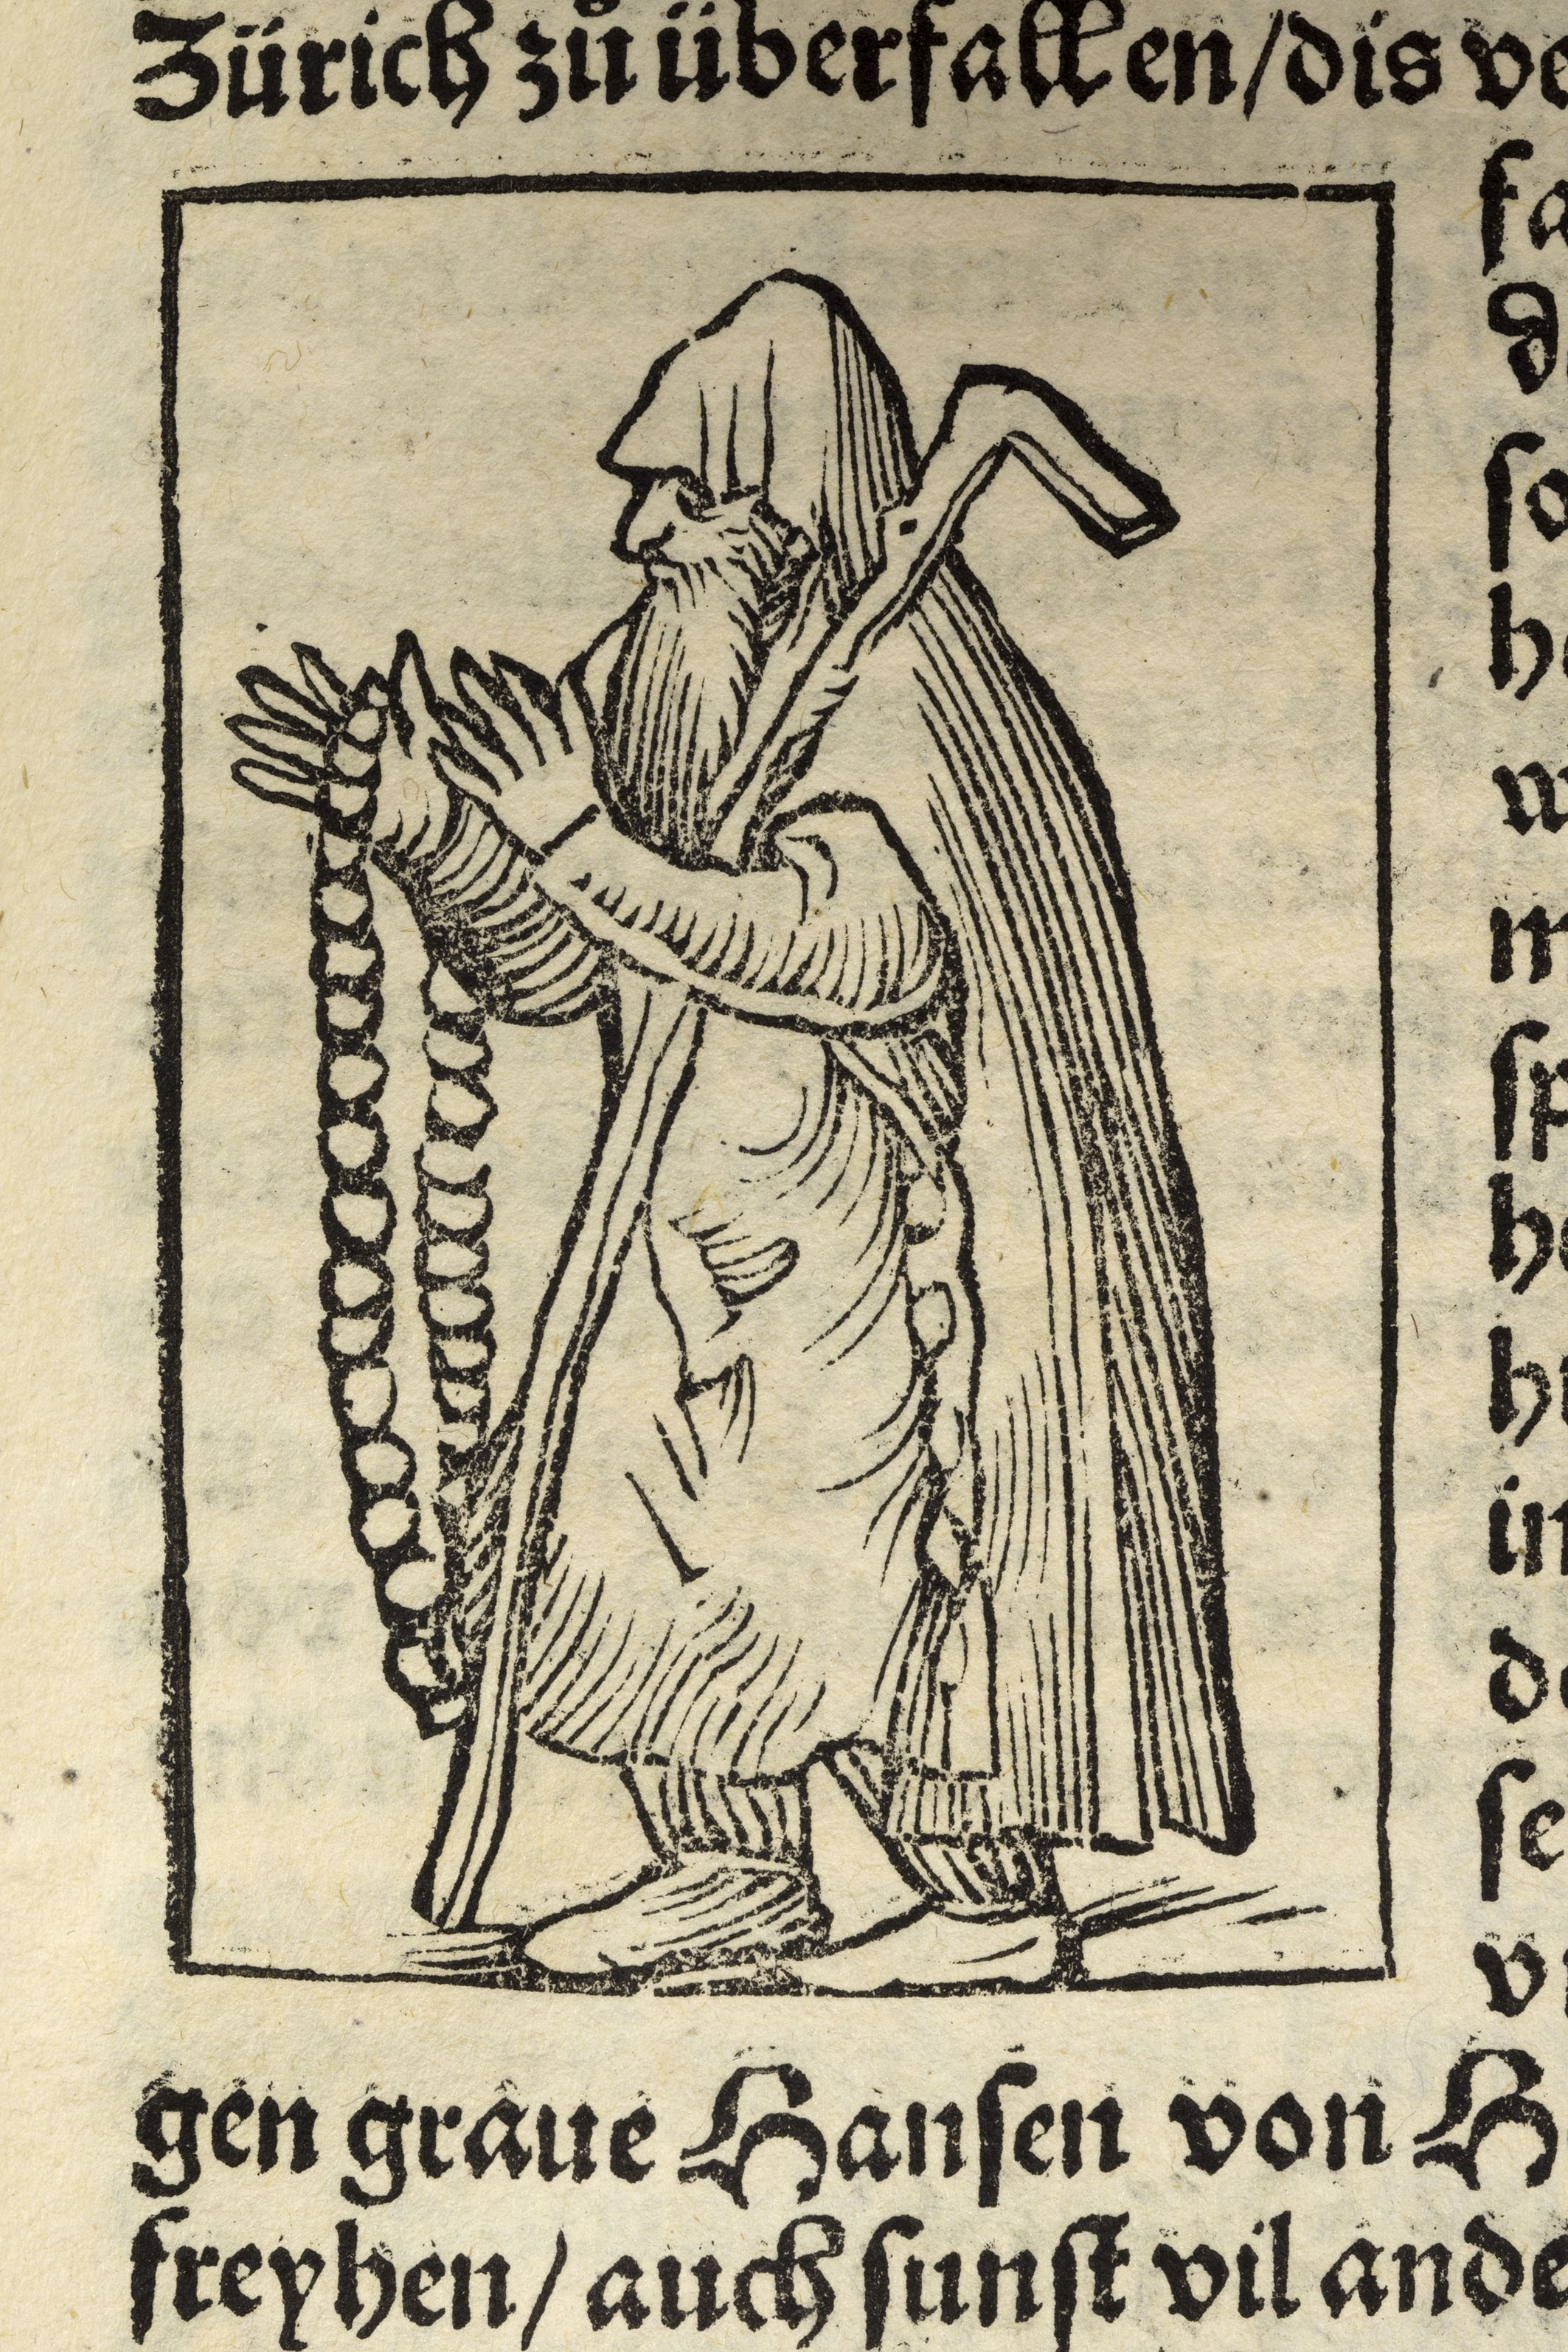 BT3.187.1(2), p.ccxlv, Sebastian Münster’s Cosmographia (1544)